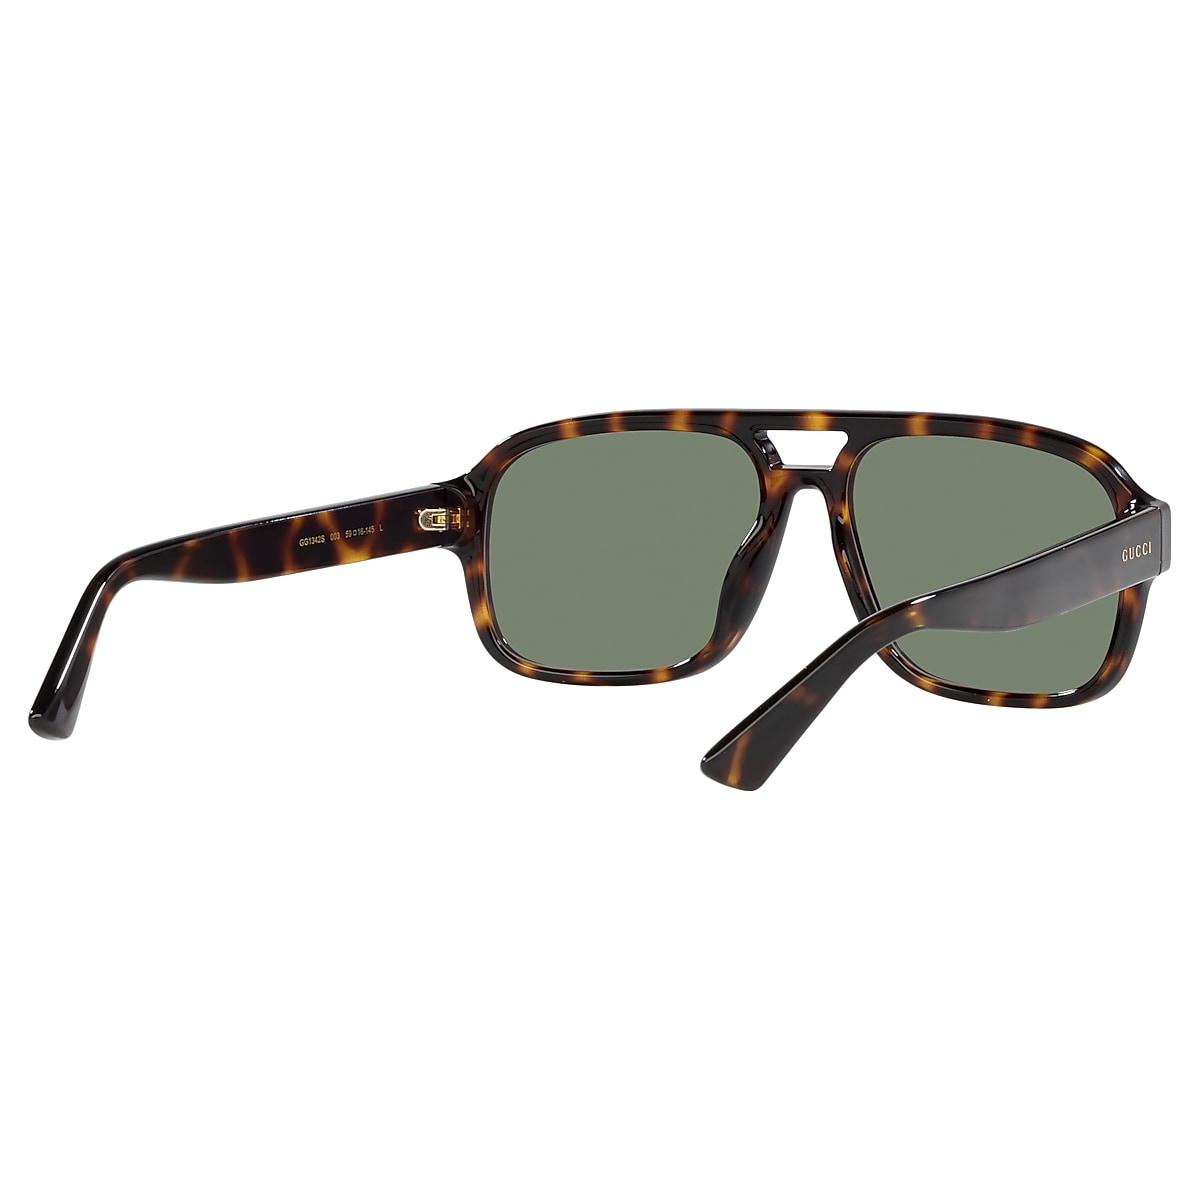 Gucci Tortoise | Glasses.com® | Free Shipping